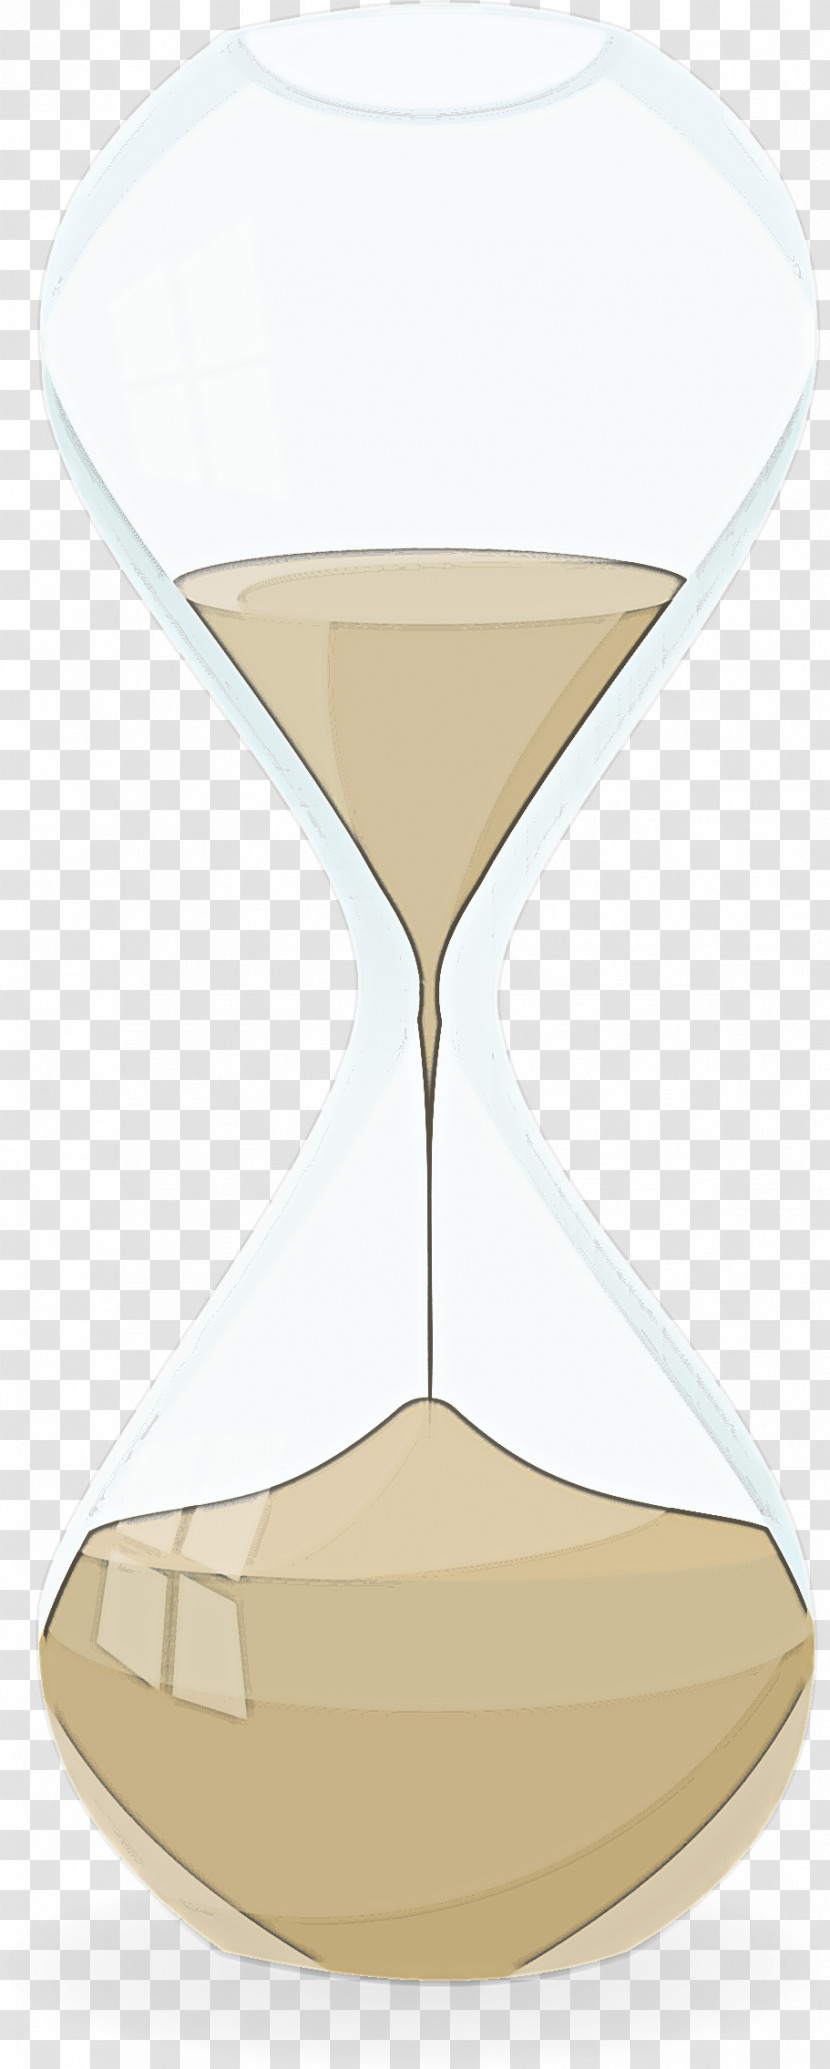 Martini Glass Hourglass Drink Drinkware Stemware Transparent PNG